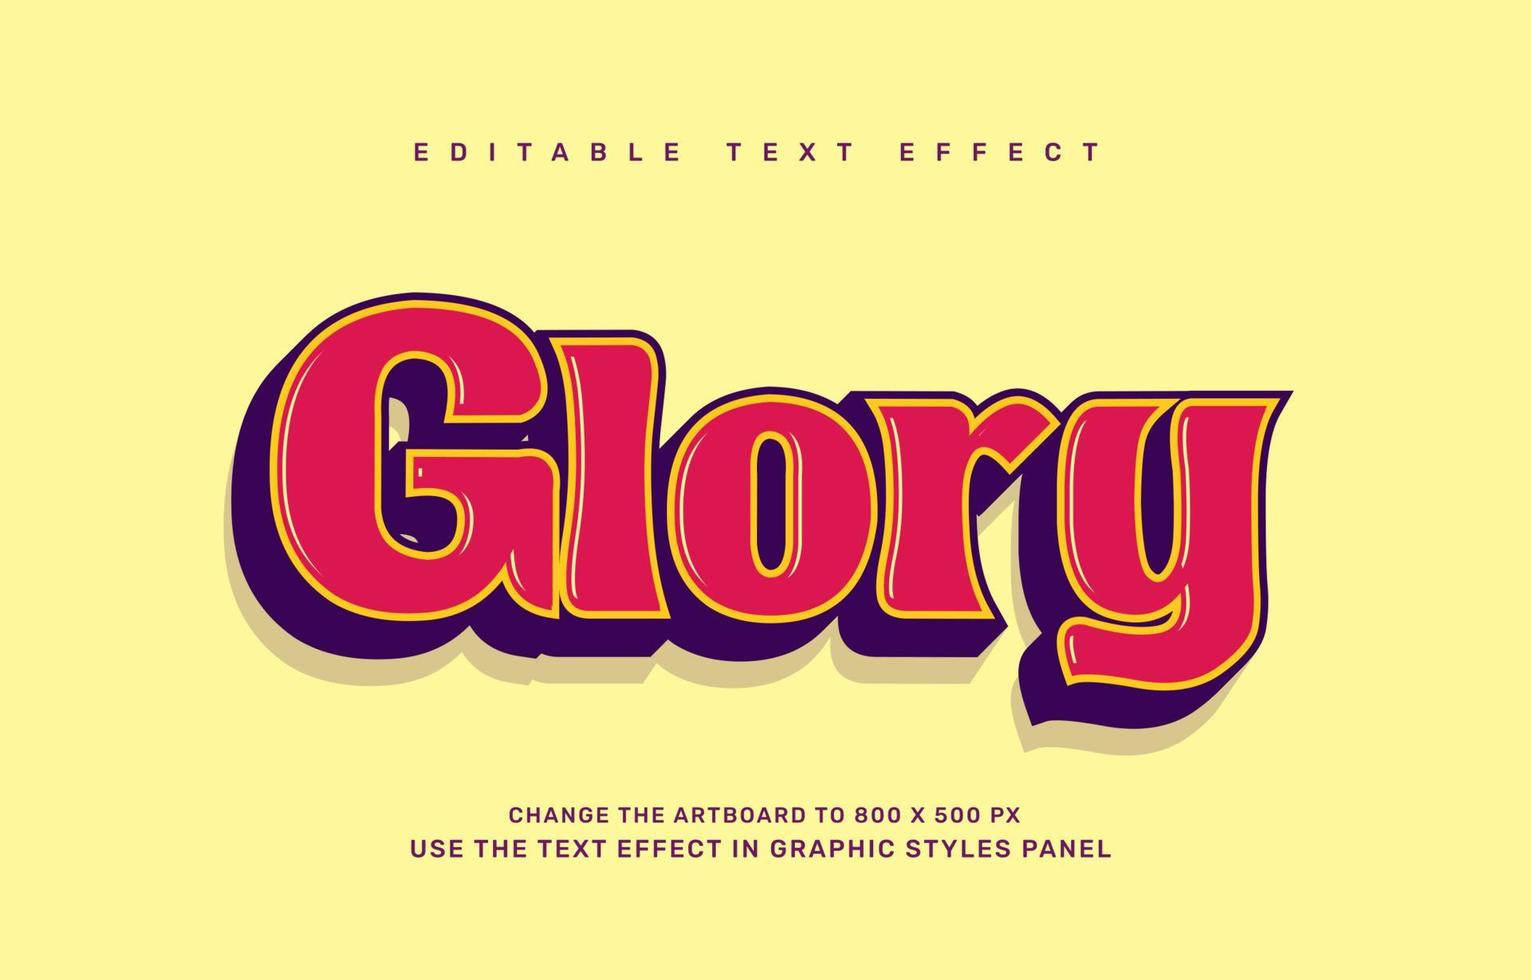 Glory editable text effect template vector